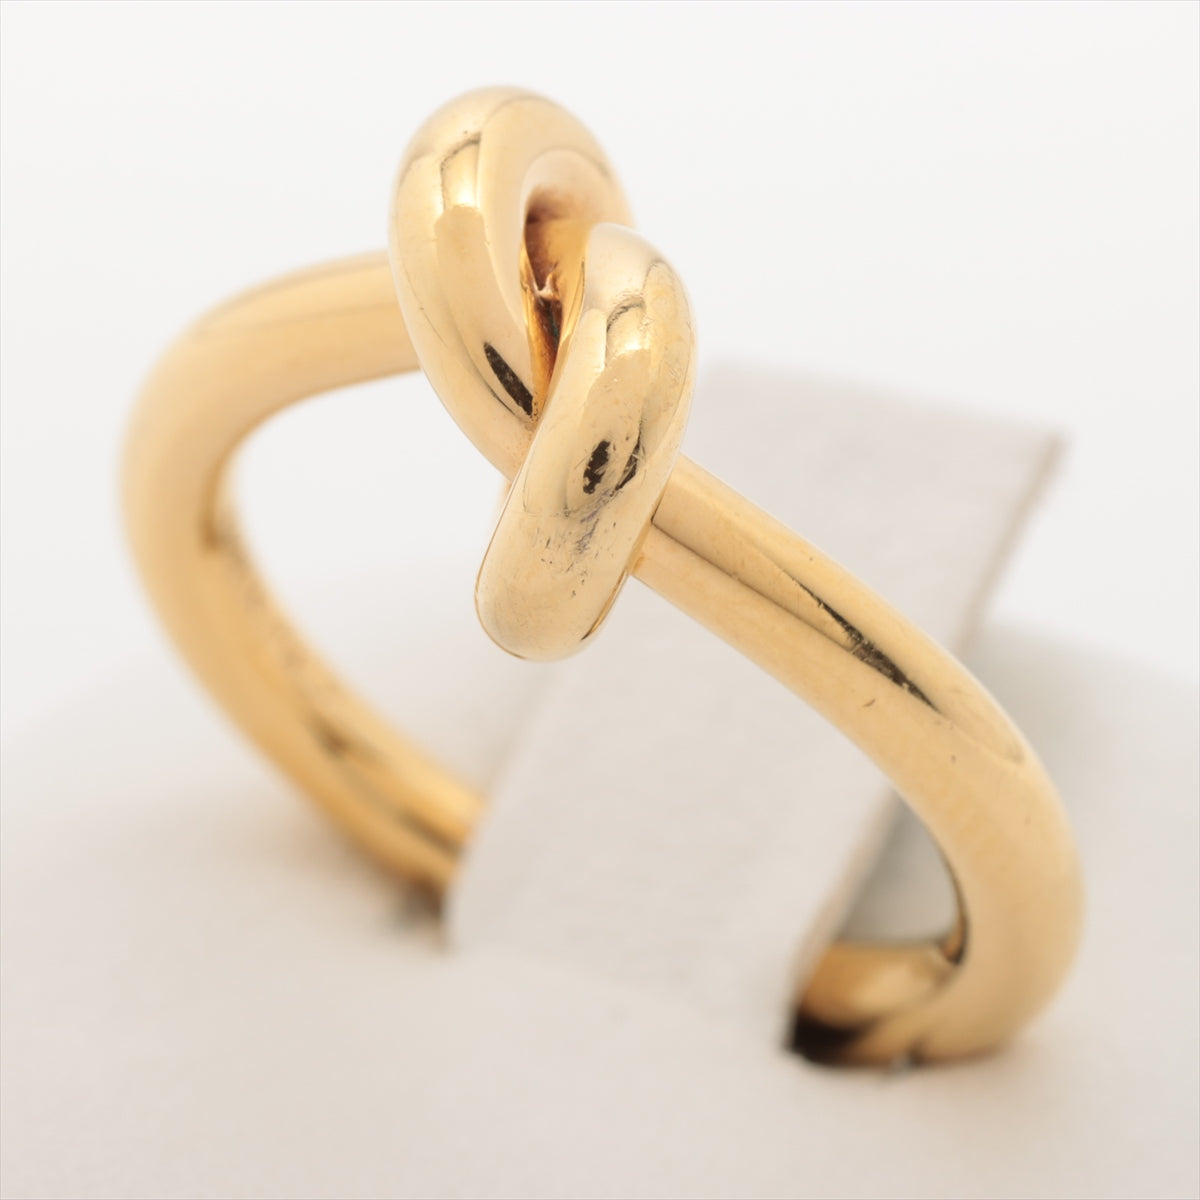 CELINE Knot rings 50 GP Gold